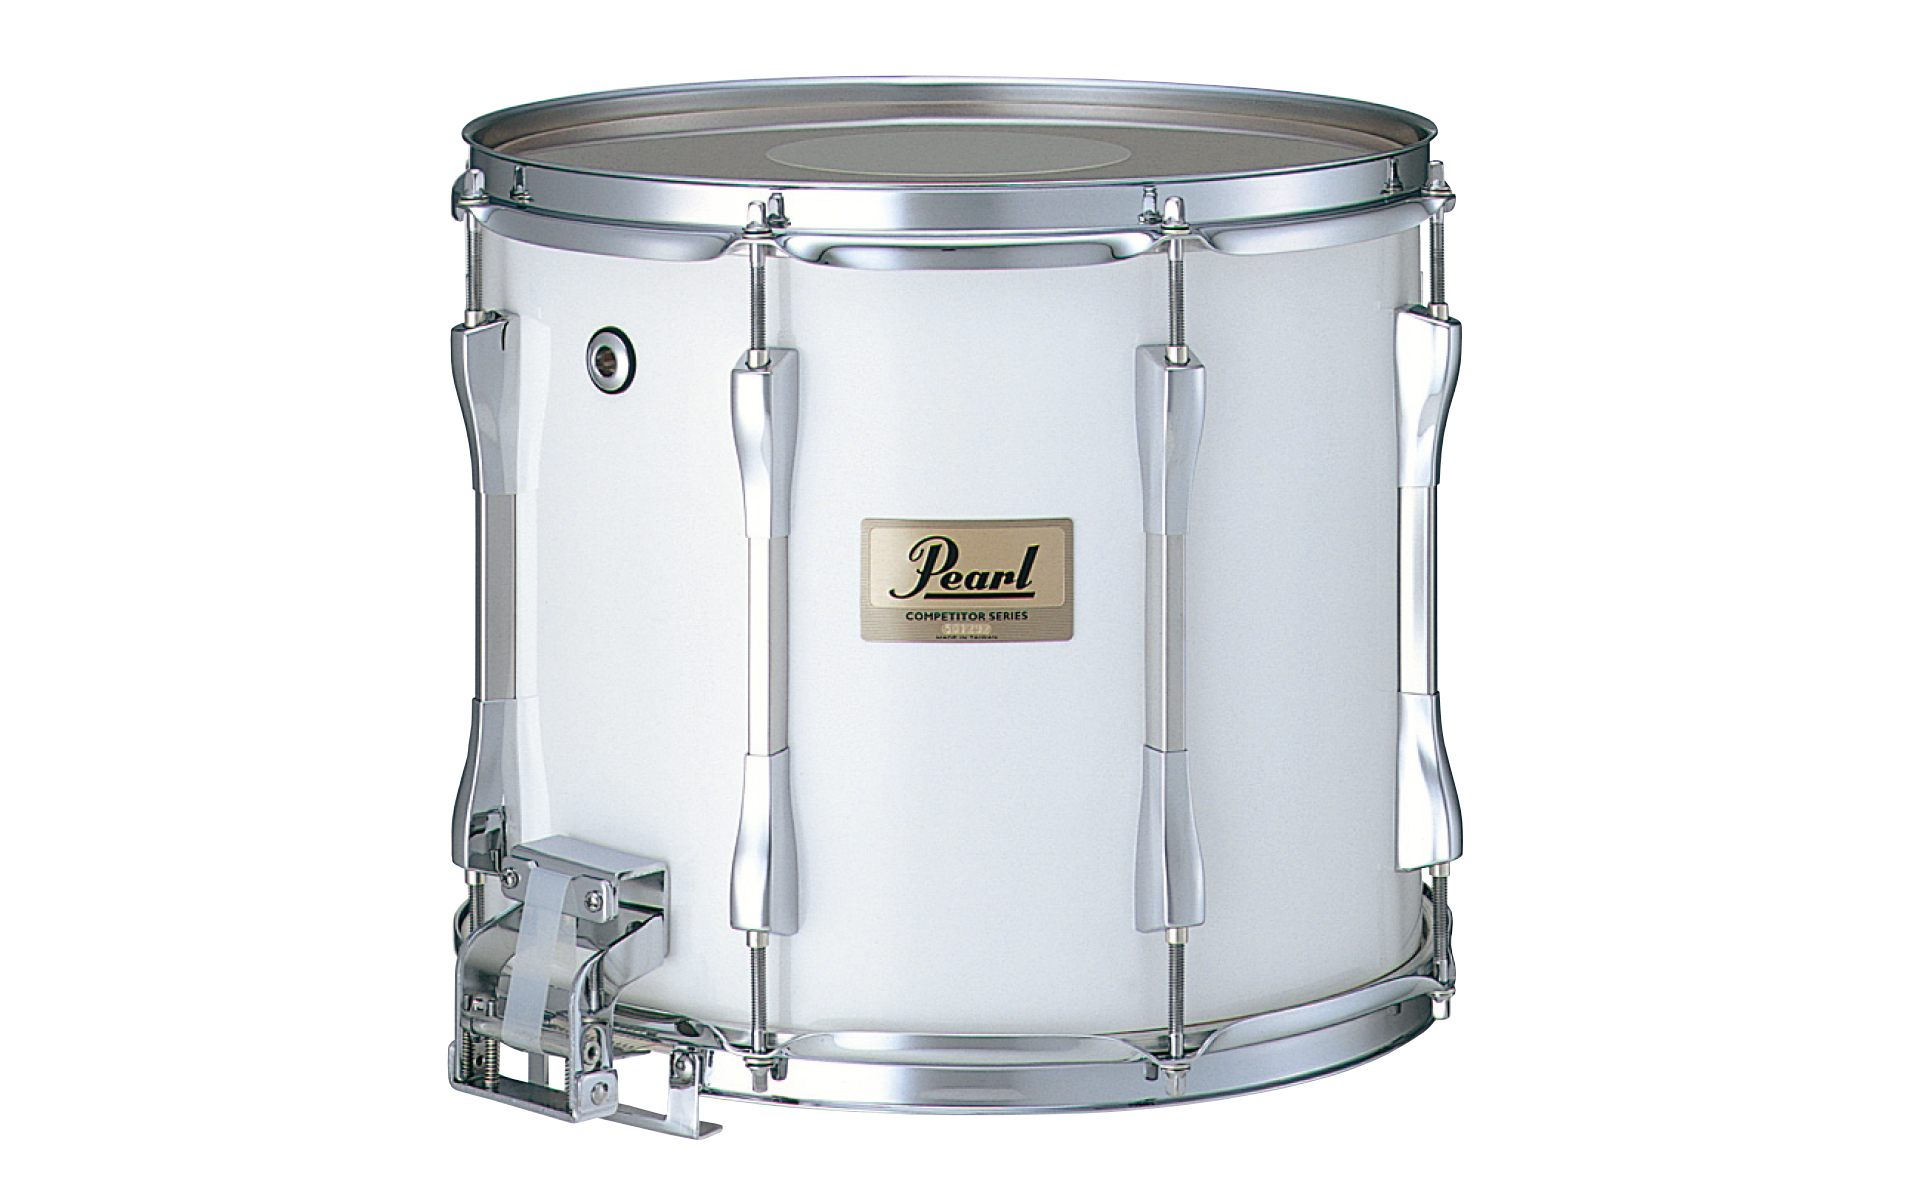 CMS Snare Drums | パール楽器【公式サイト】Pearl Drums